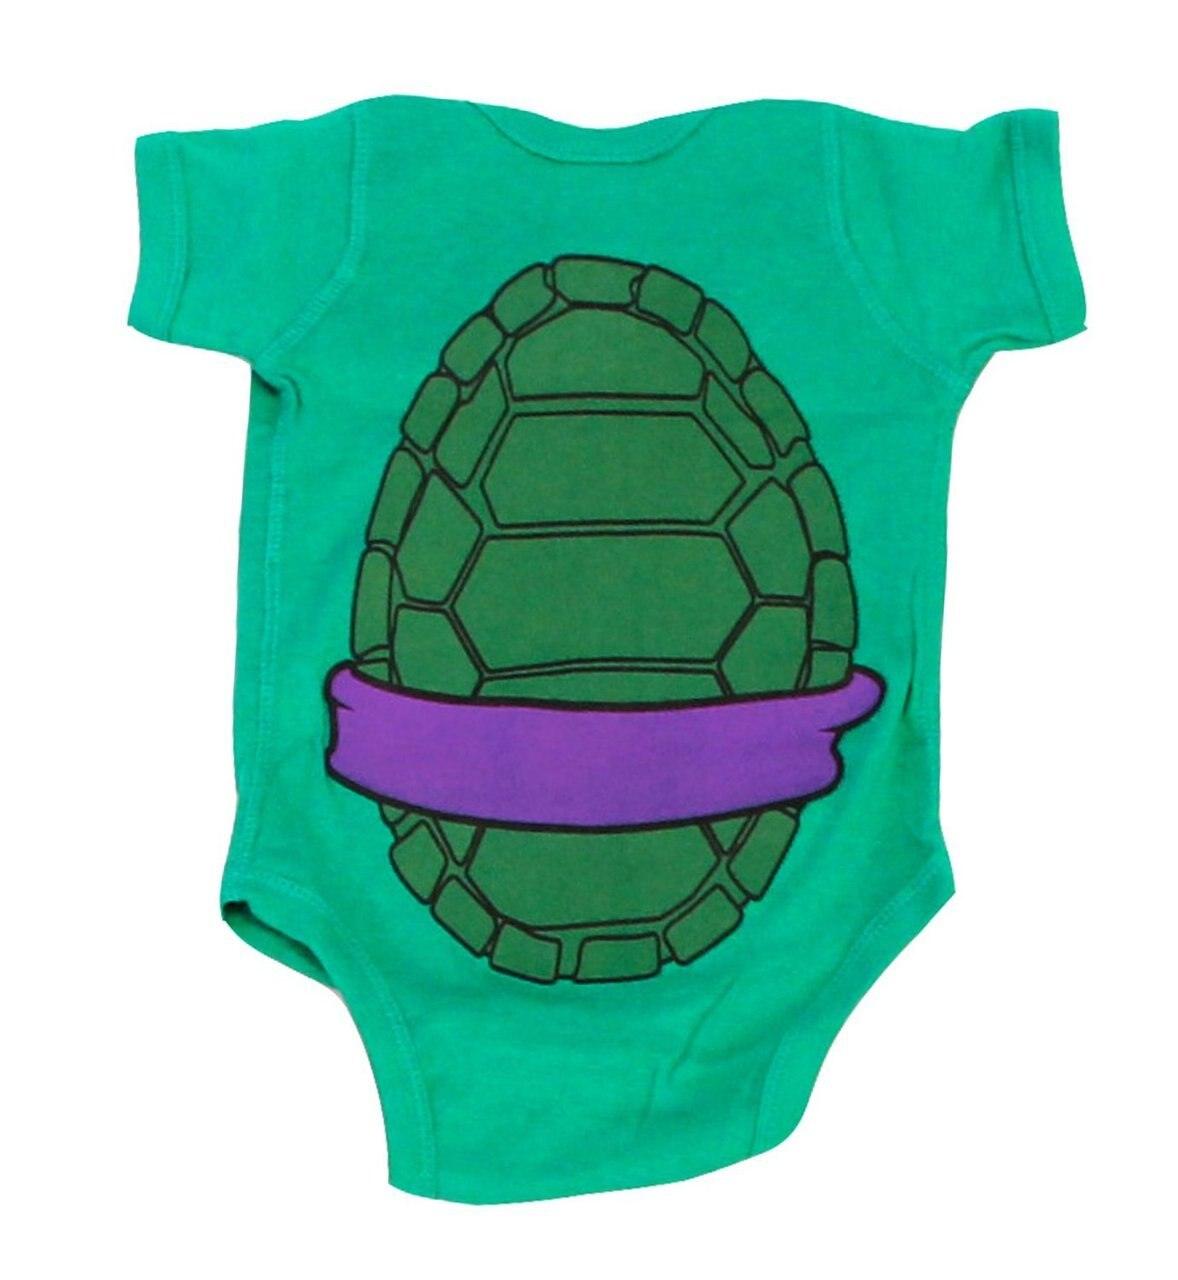  TMNT Union Suit w/Cape Teenage Mutant Ninja Turtles Pajamas  (Medium) Green : Clothing, Shoes & Jewelry